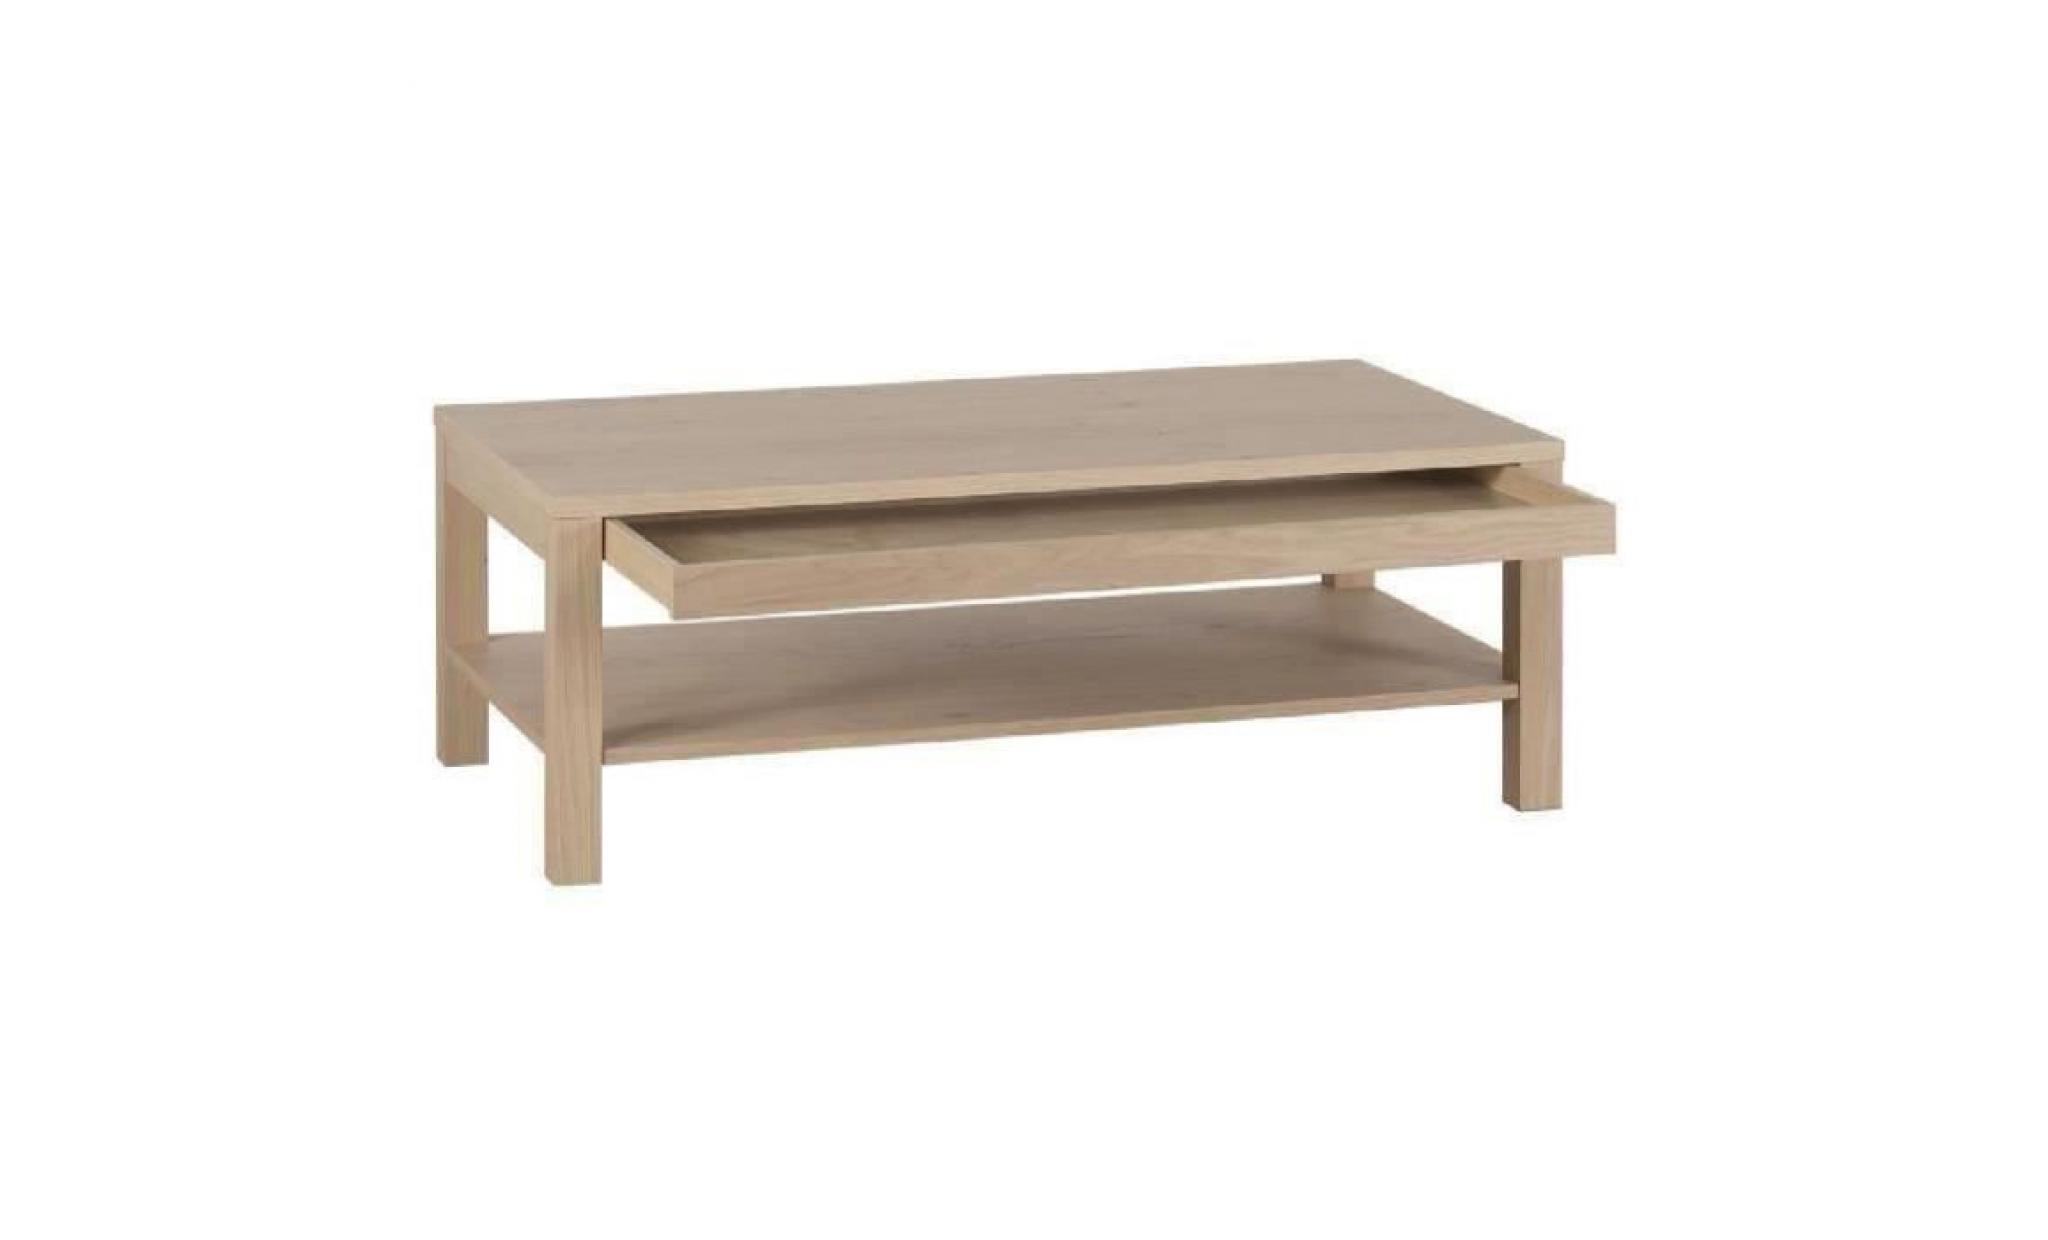 nano table basse style contemporain placage bois chêne verni   l 110 x l 60 cm